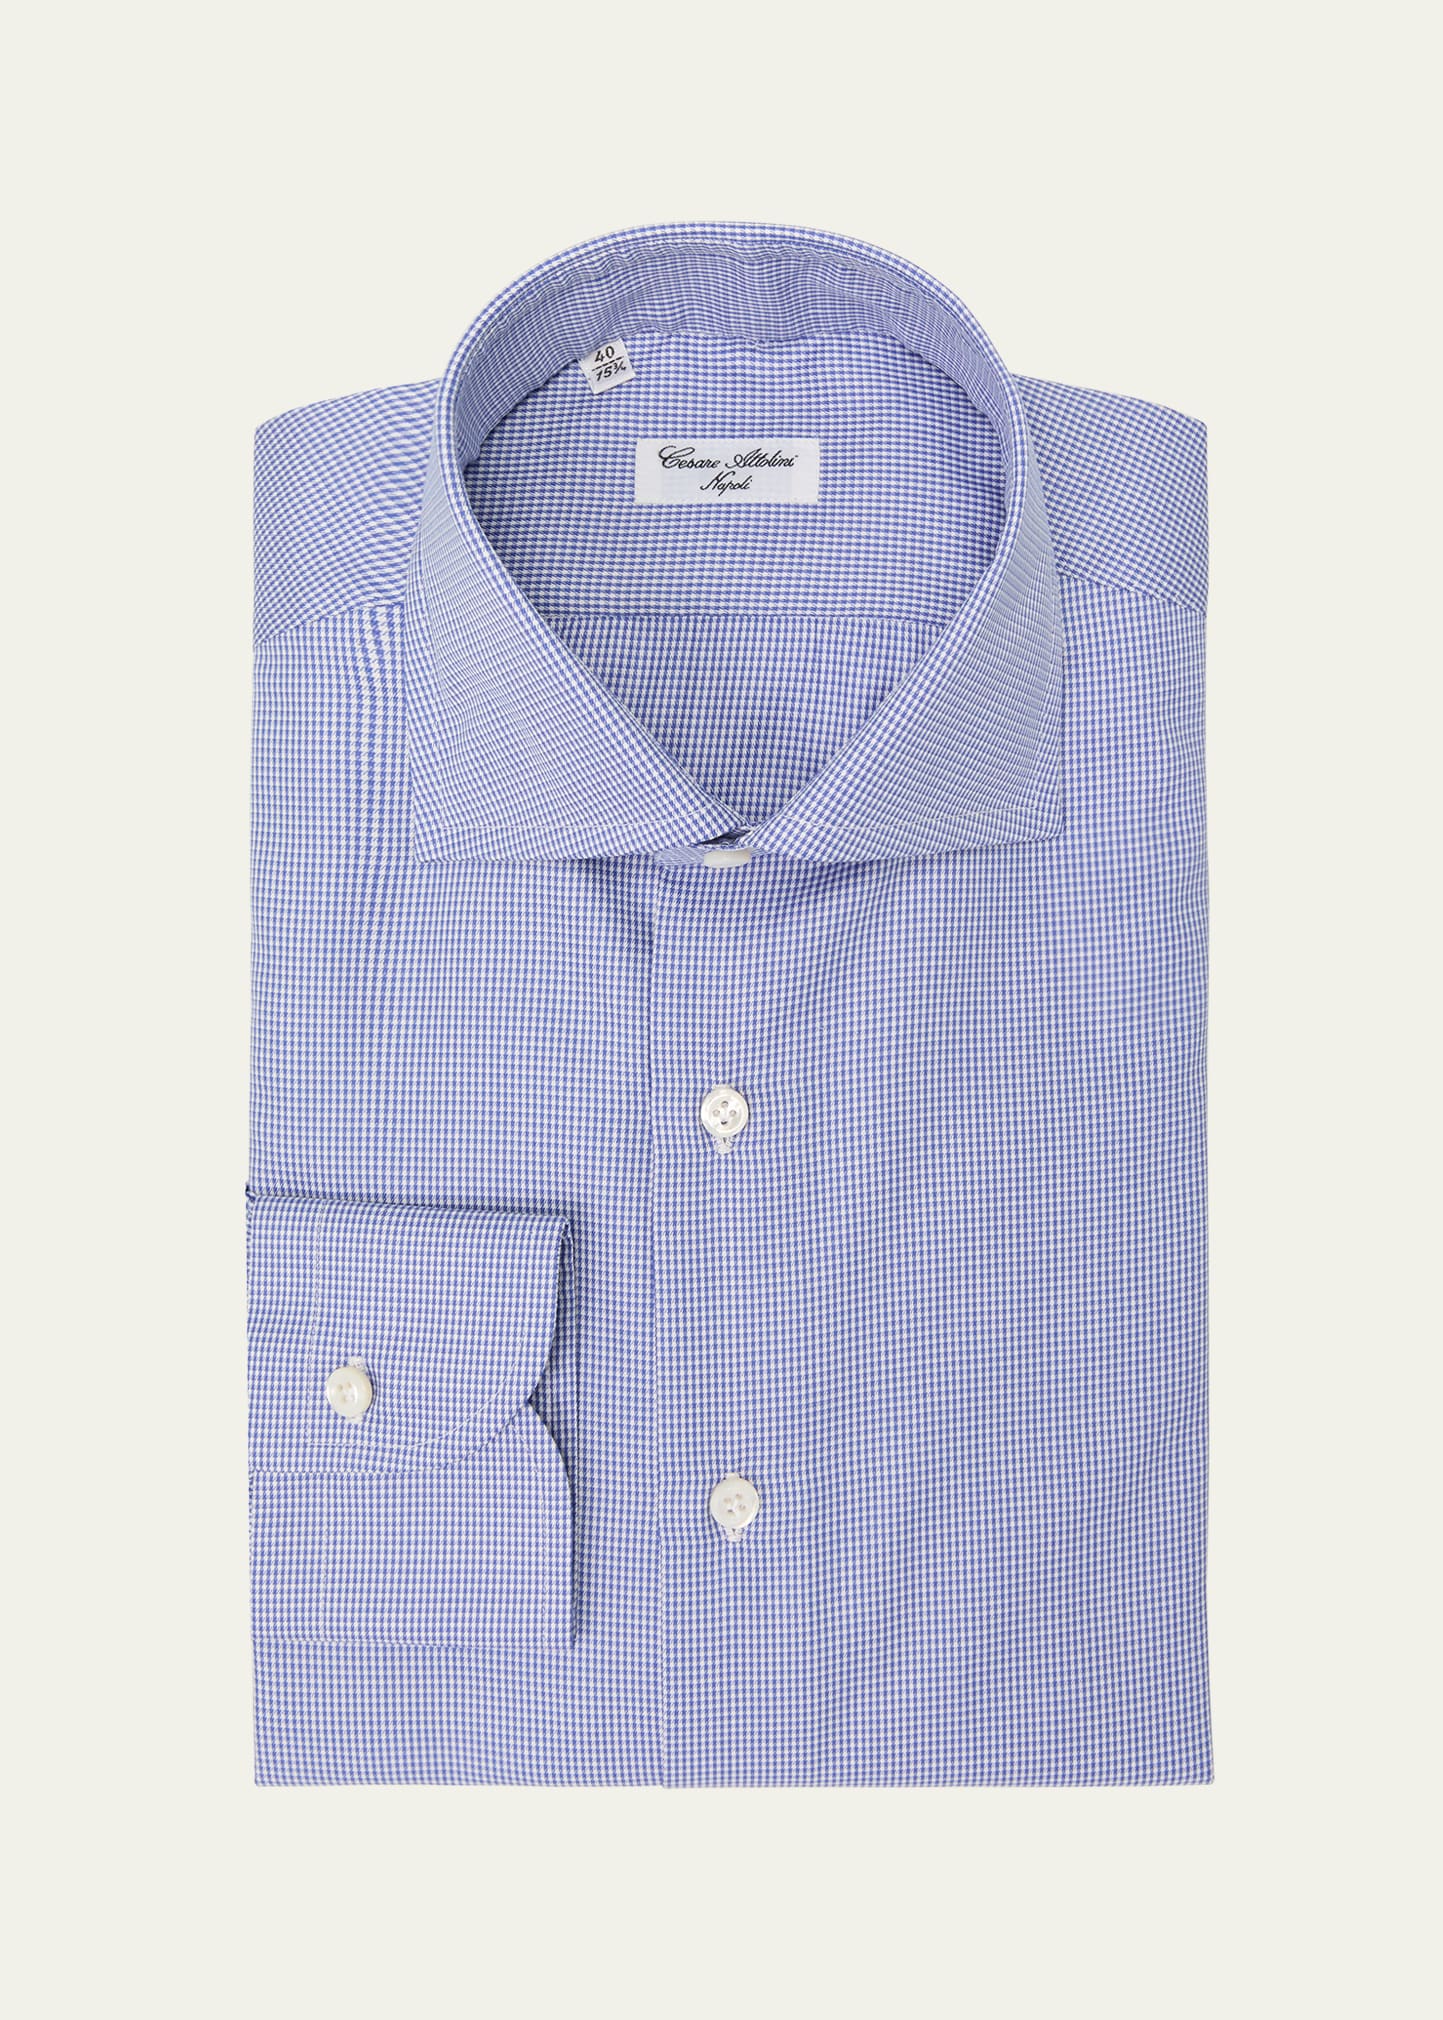 Men's Cotton Micro-Houndstooth Dress Shirt